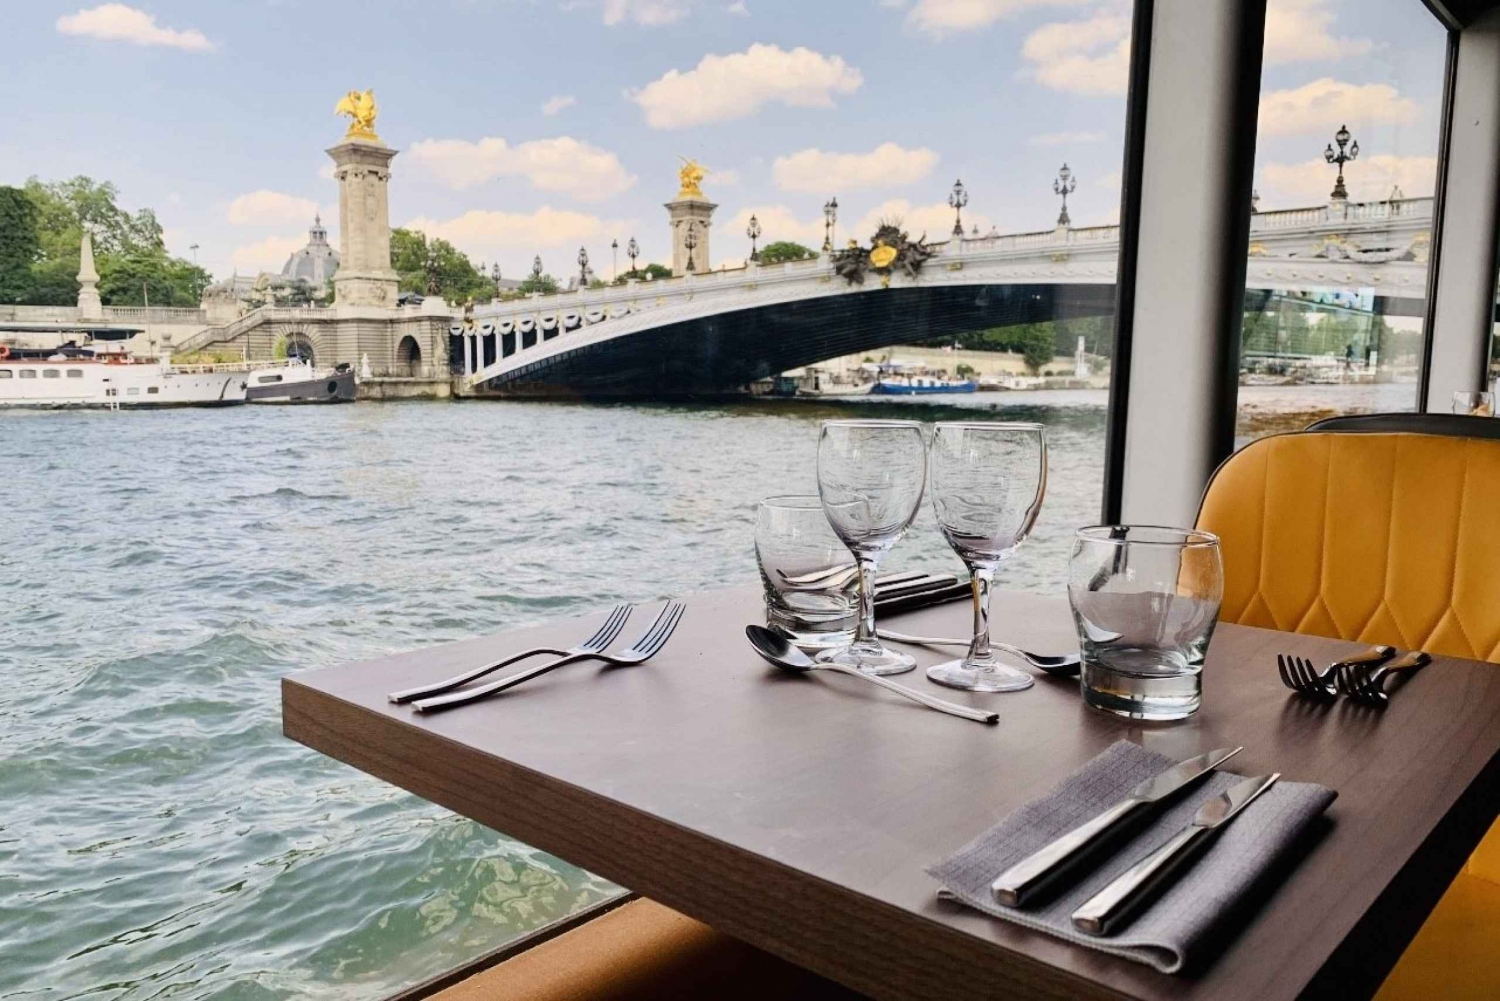 Enjoy-a-Sightseeing-Cruise-on-the-Seine